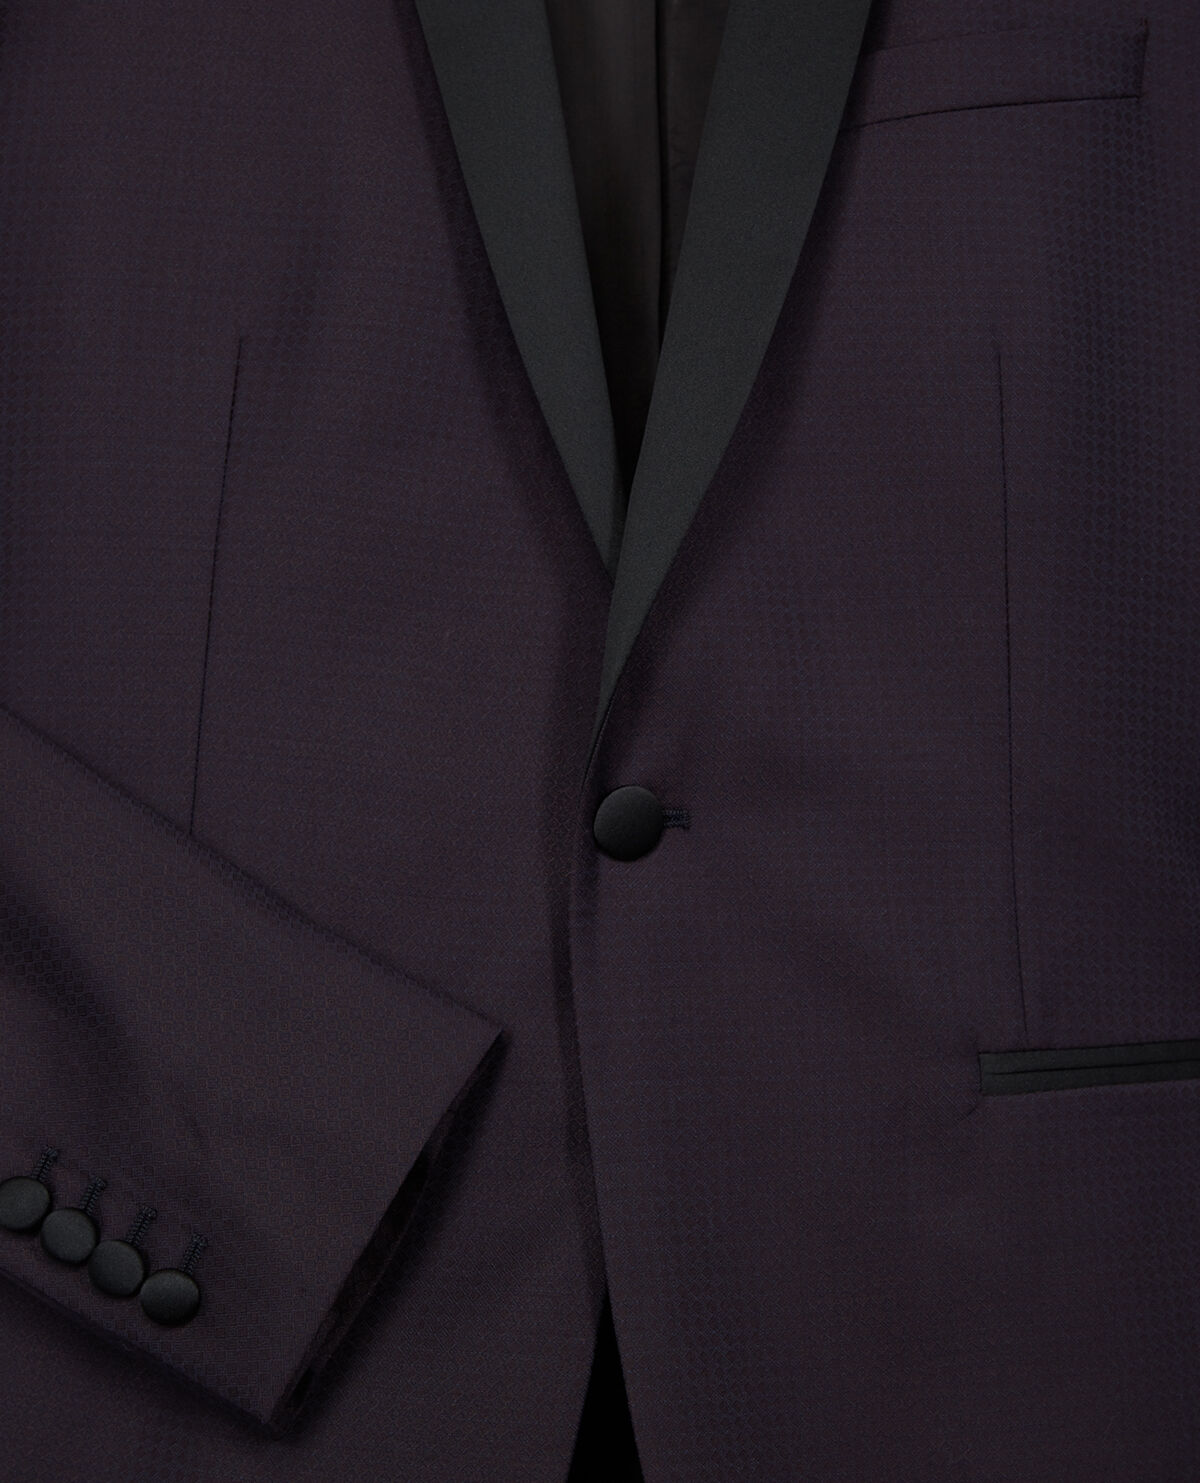 Purple shirt with black pinstripes, fashion small collar MMMoyano